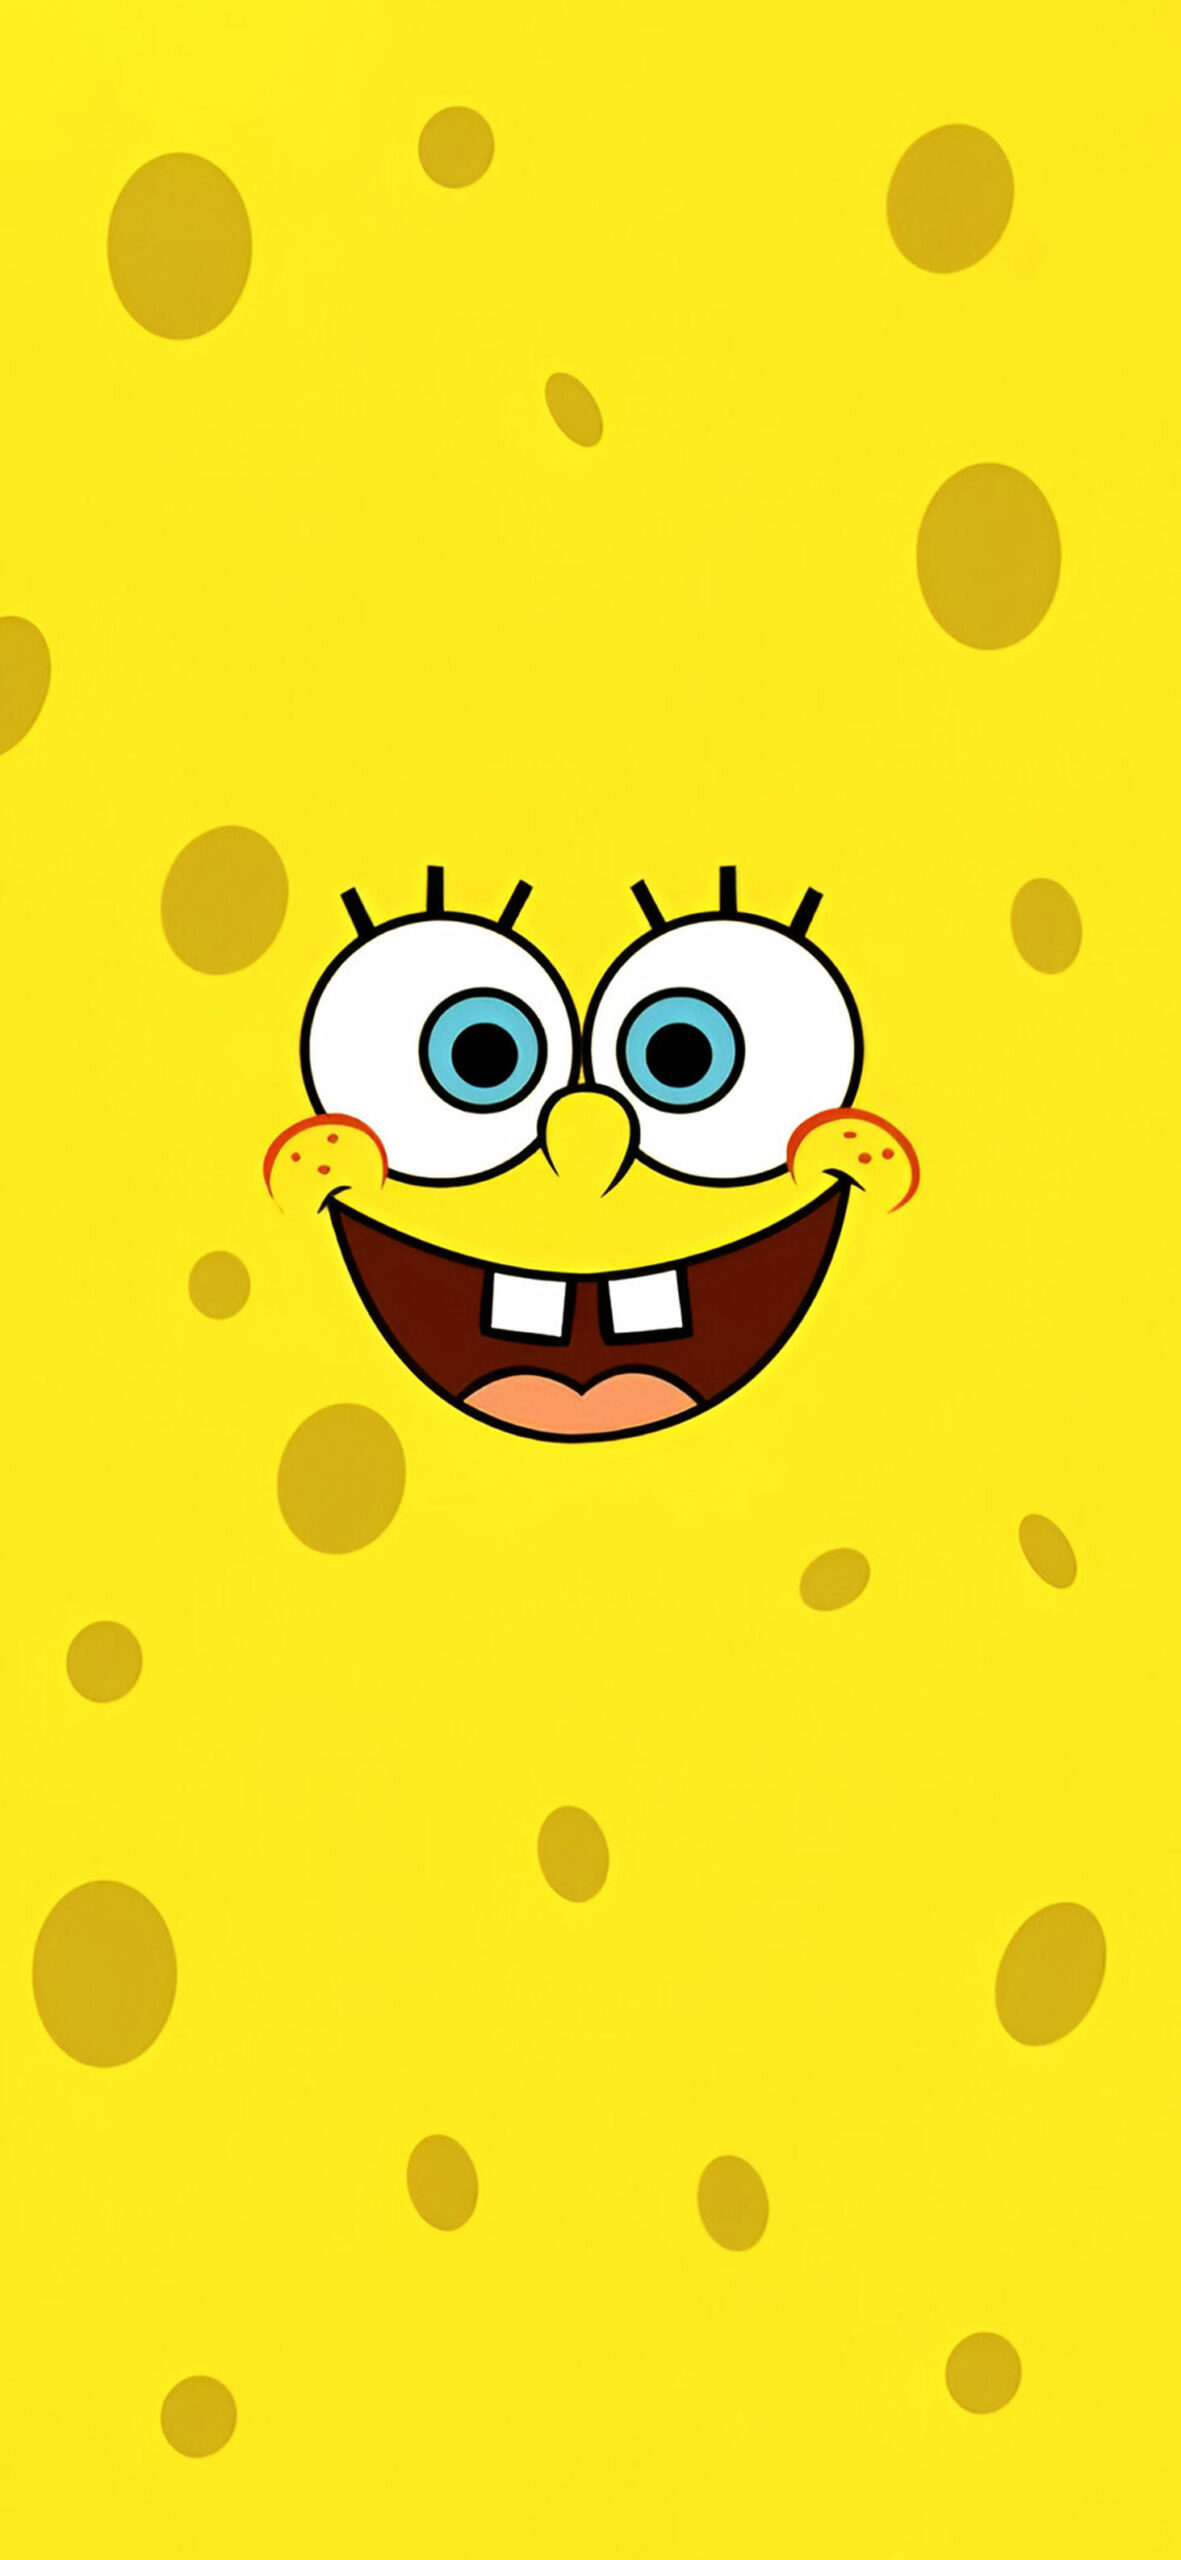 SpongeBob squarepants minimalist wallpaper Cool cartoon aesthe